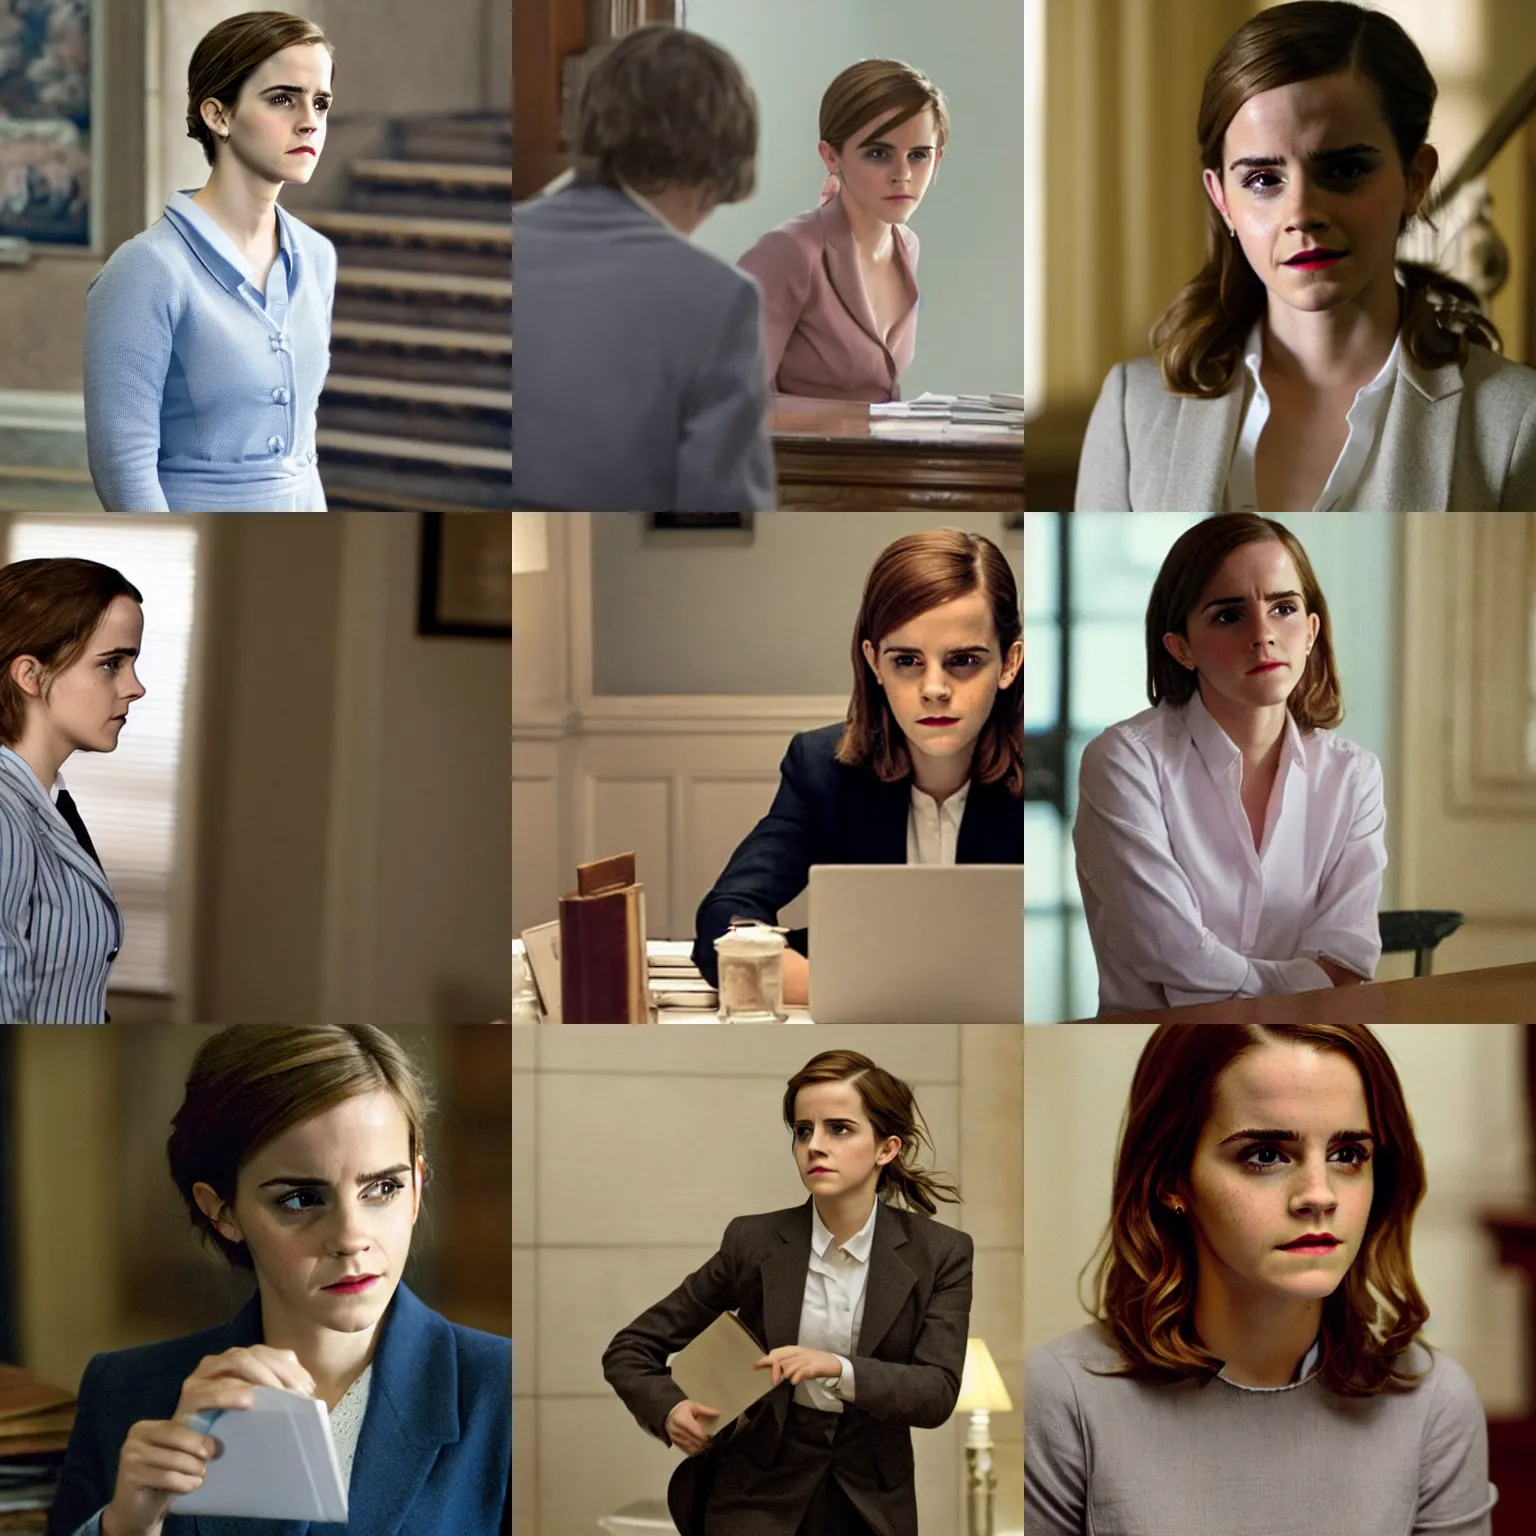 Prompt: Movie still of Emma Watson in Secretary